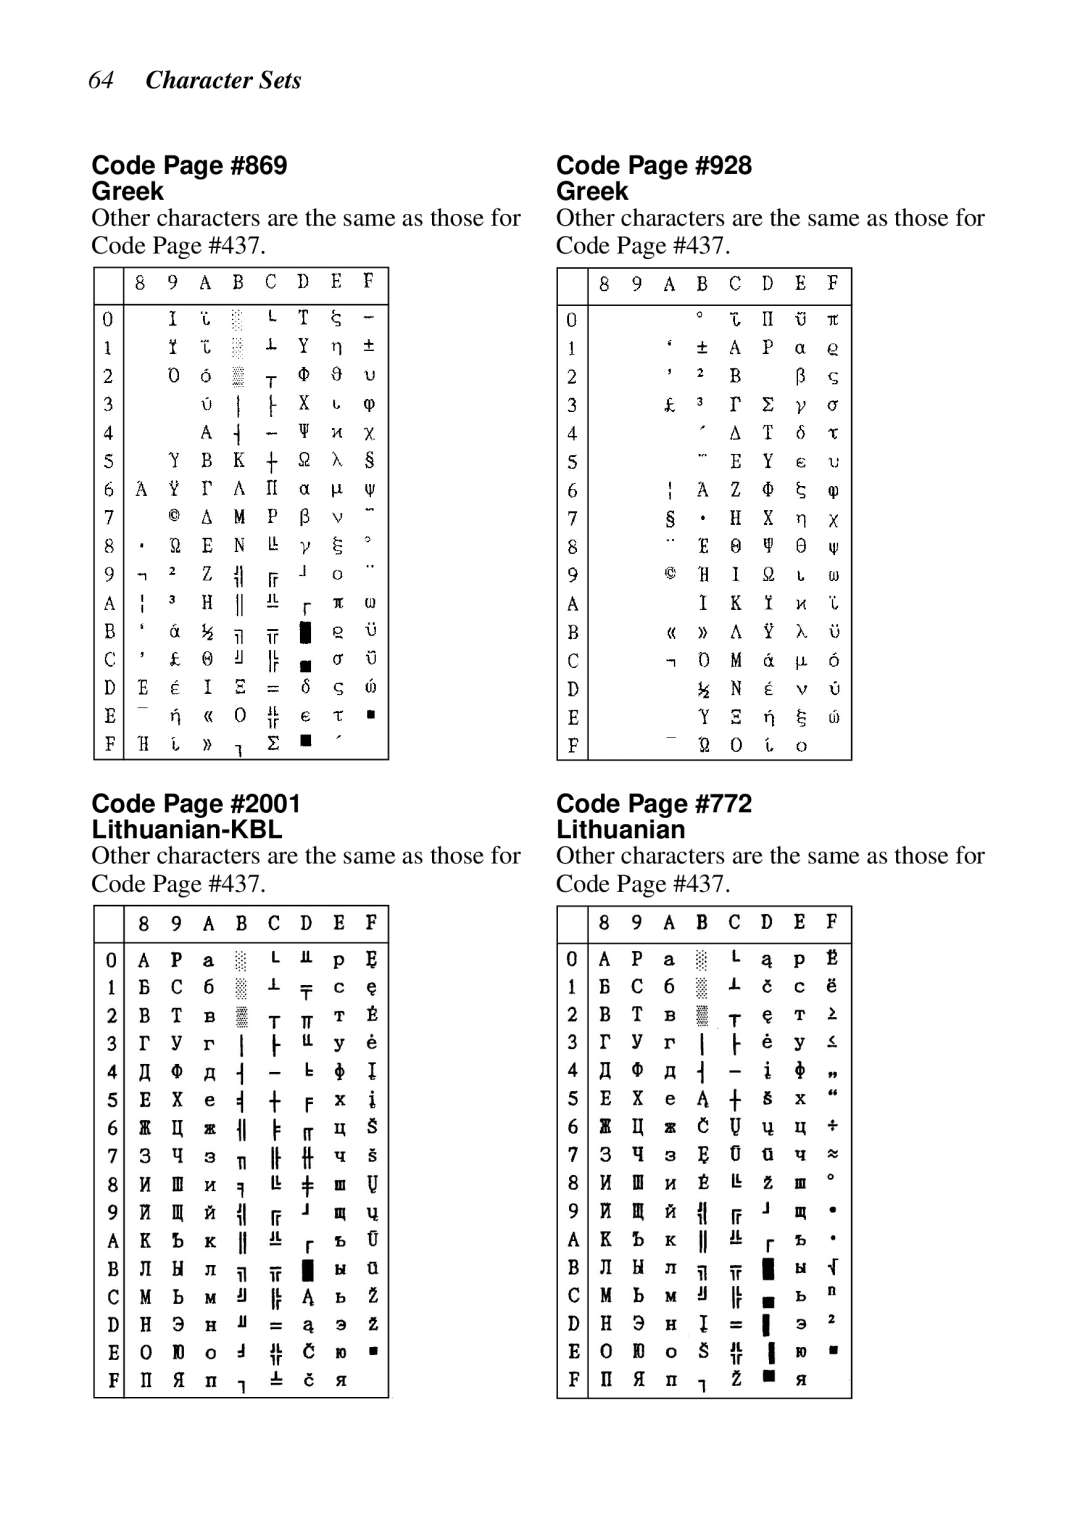 Star Micronics XB24-250 II Character Sets, Code Page #869 Greek, Code Page #2001 Lithuanian-KBL, Code Page #928 Greek 